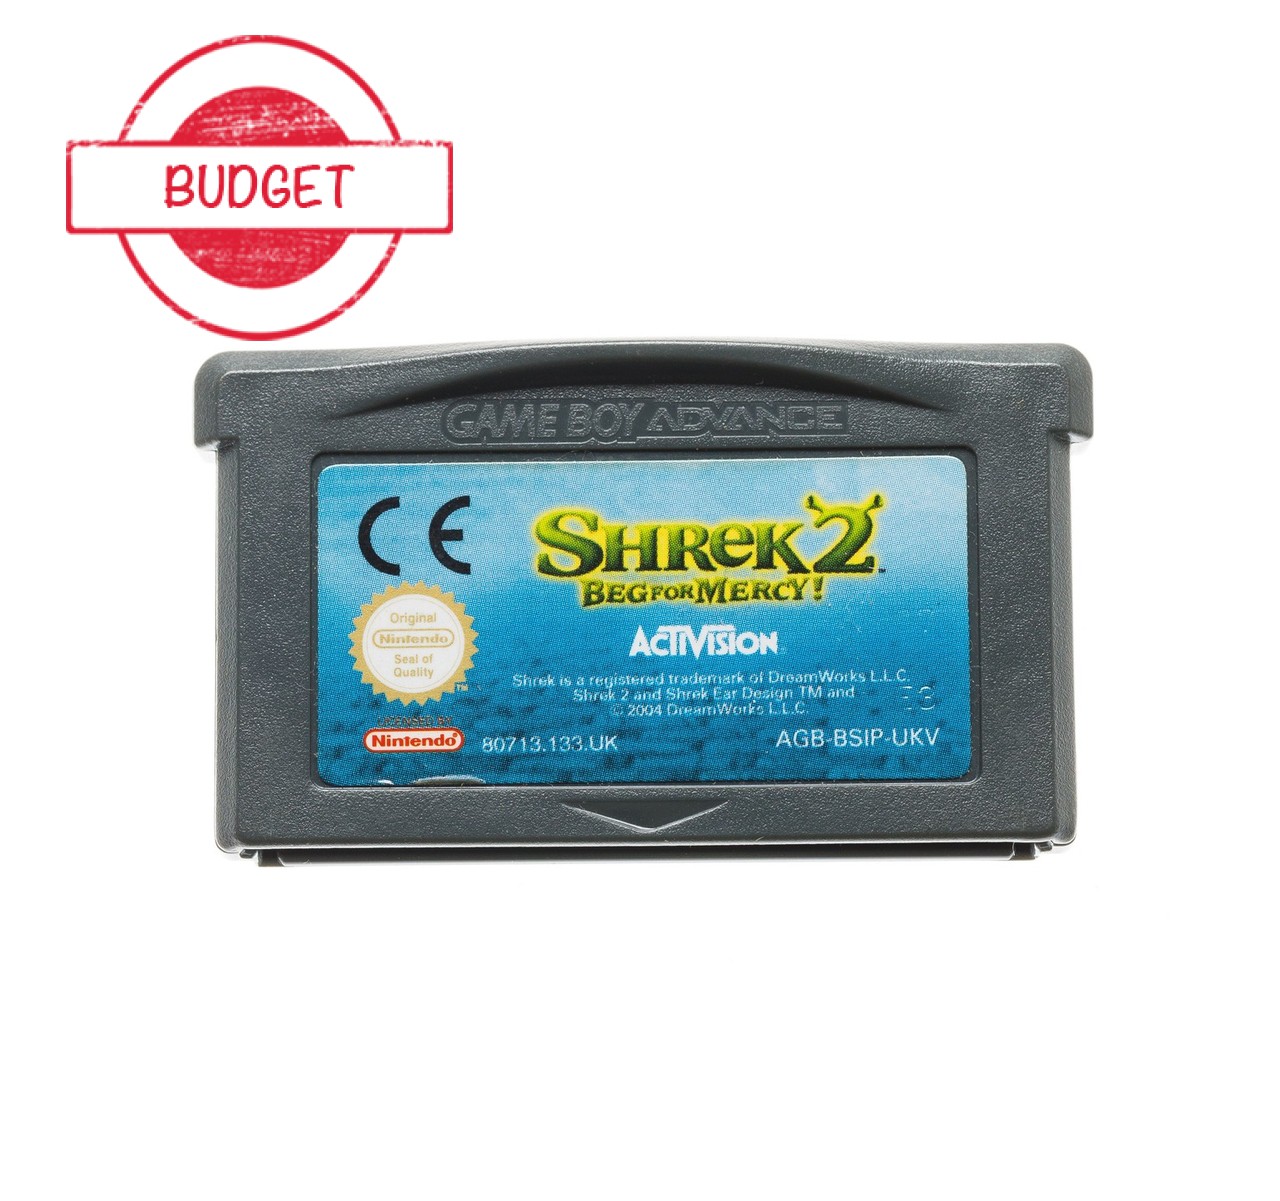 Shrek 2 Beg for Mercy - Budget - Gameboy Advance Games